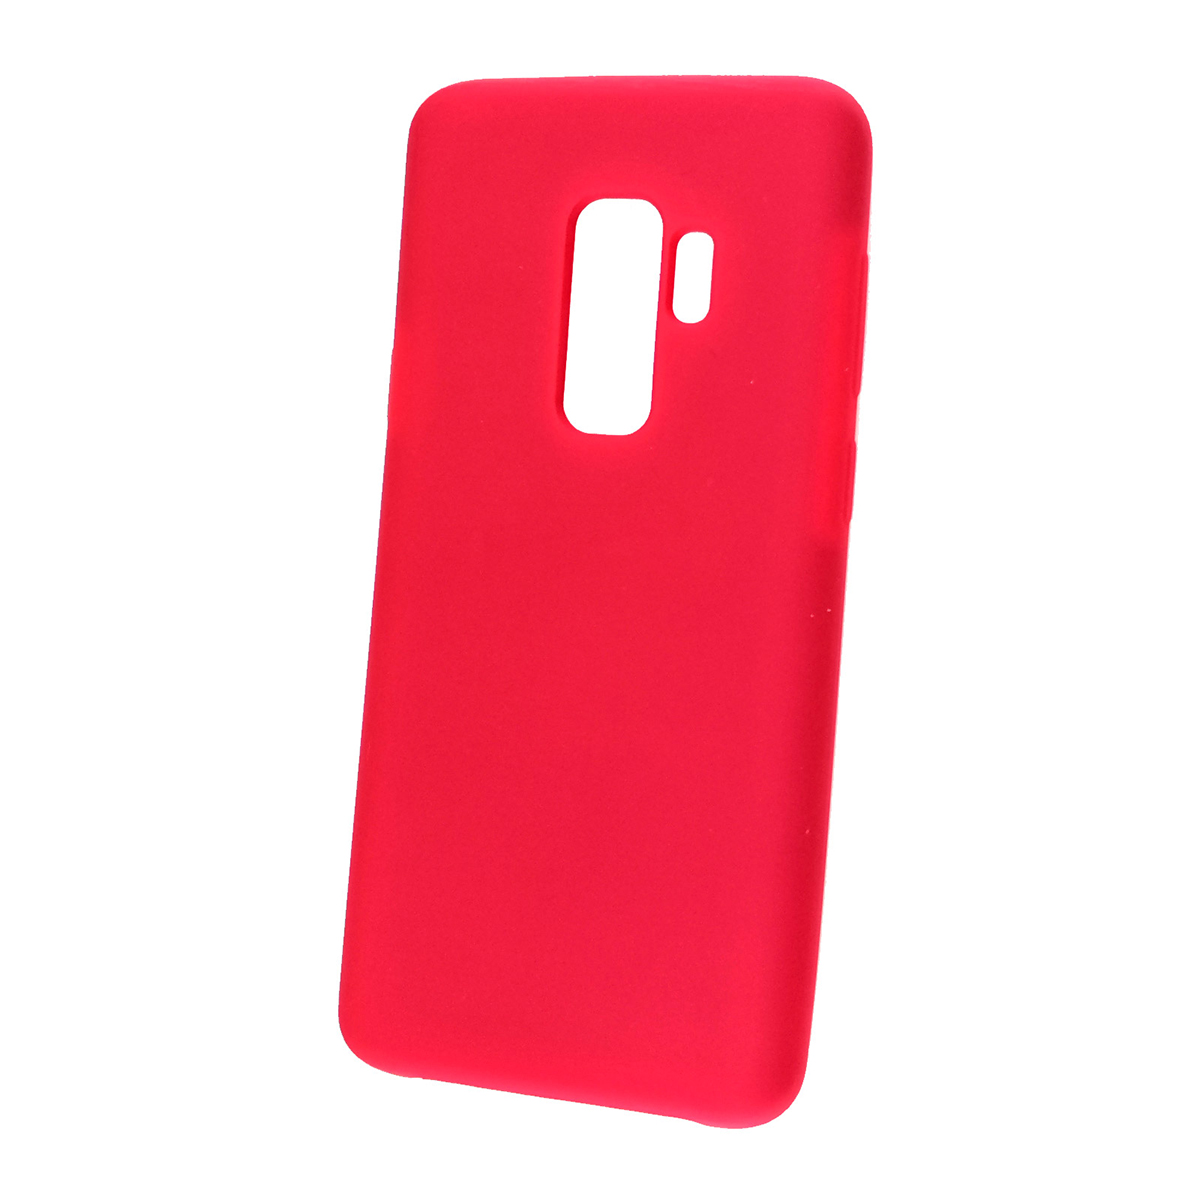 Чехол накладка Silicon Cover для SAMSUNG Galaxy S9 Plus (SM-G965), силикон, бархат, цвет красный.